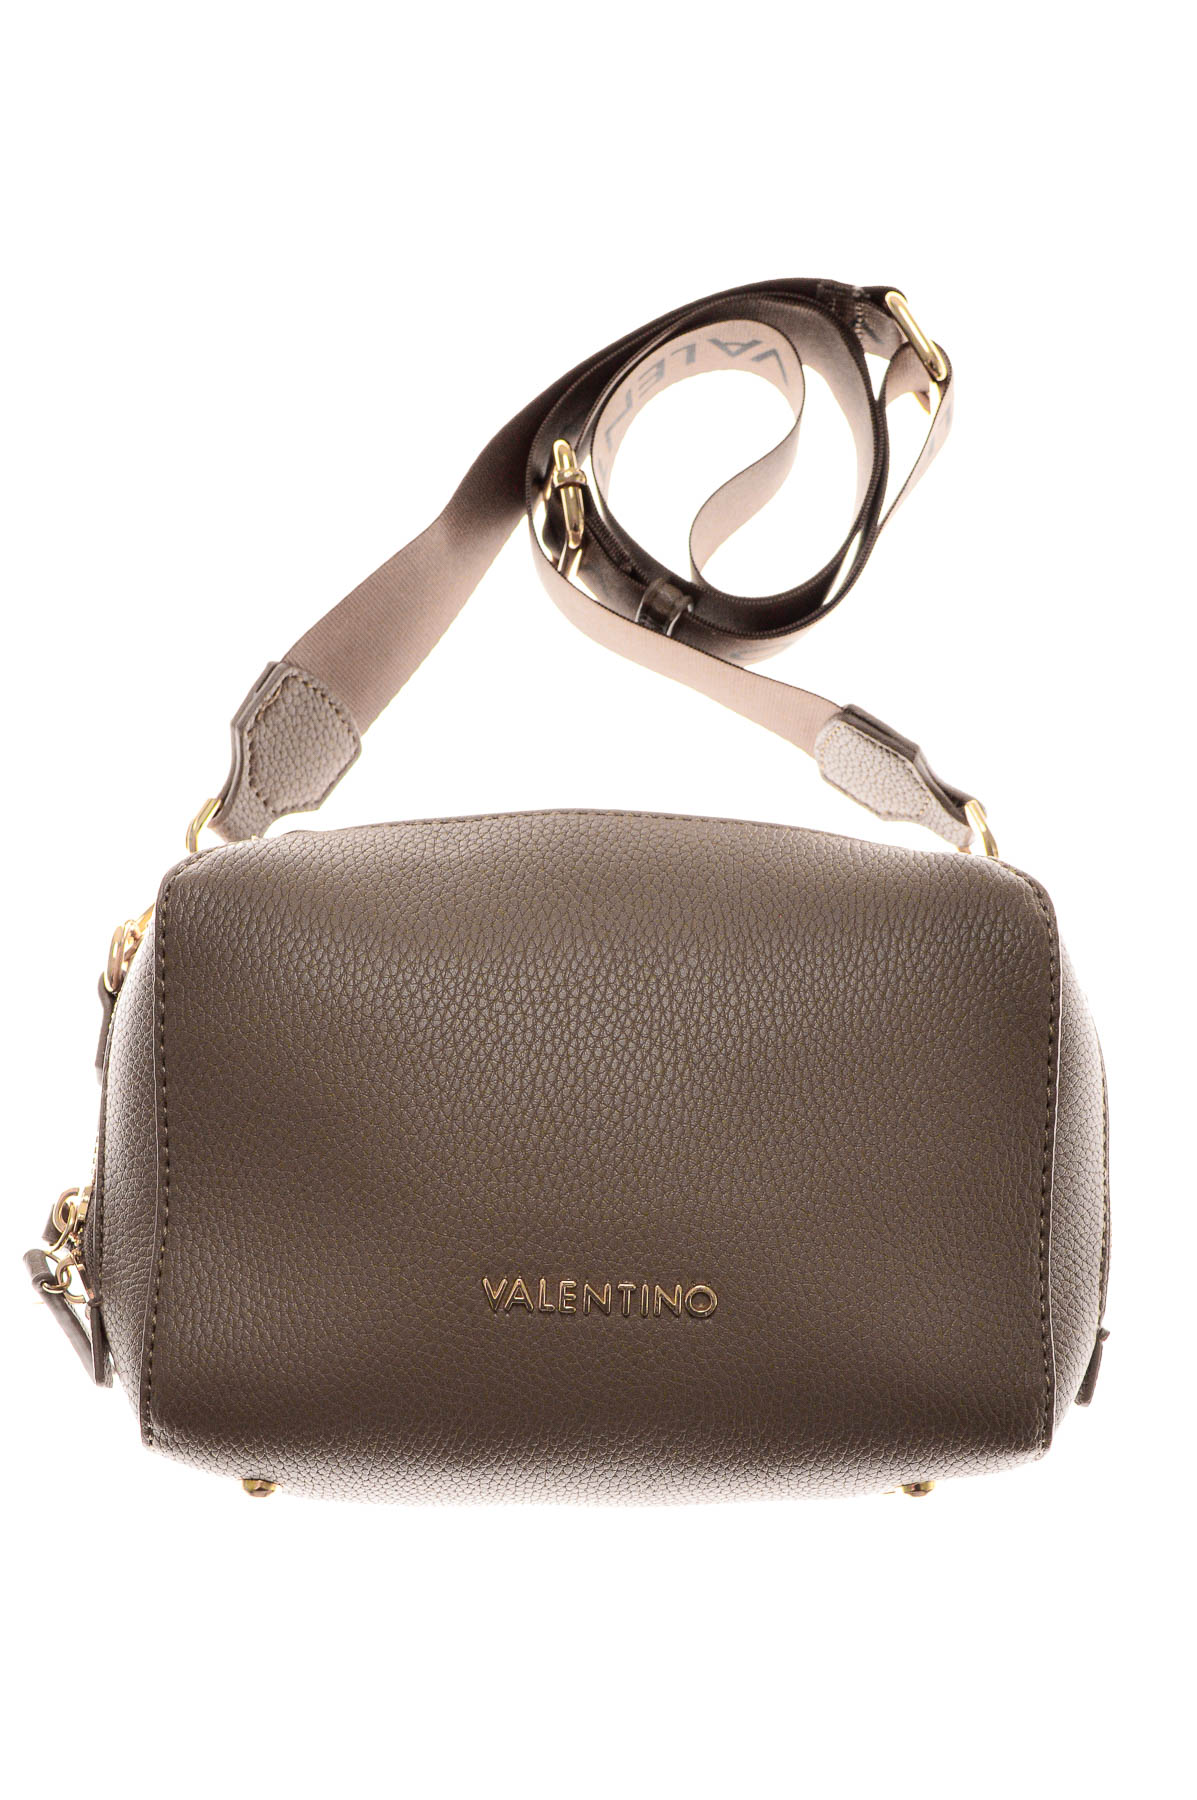 Women's bag - Valentino - 0